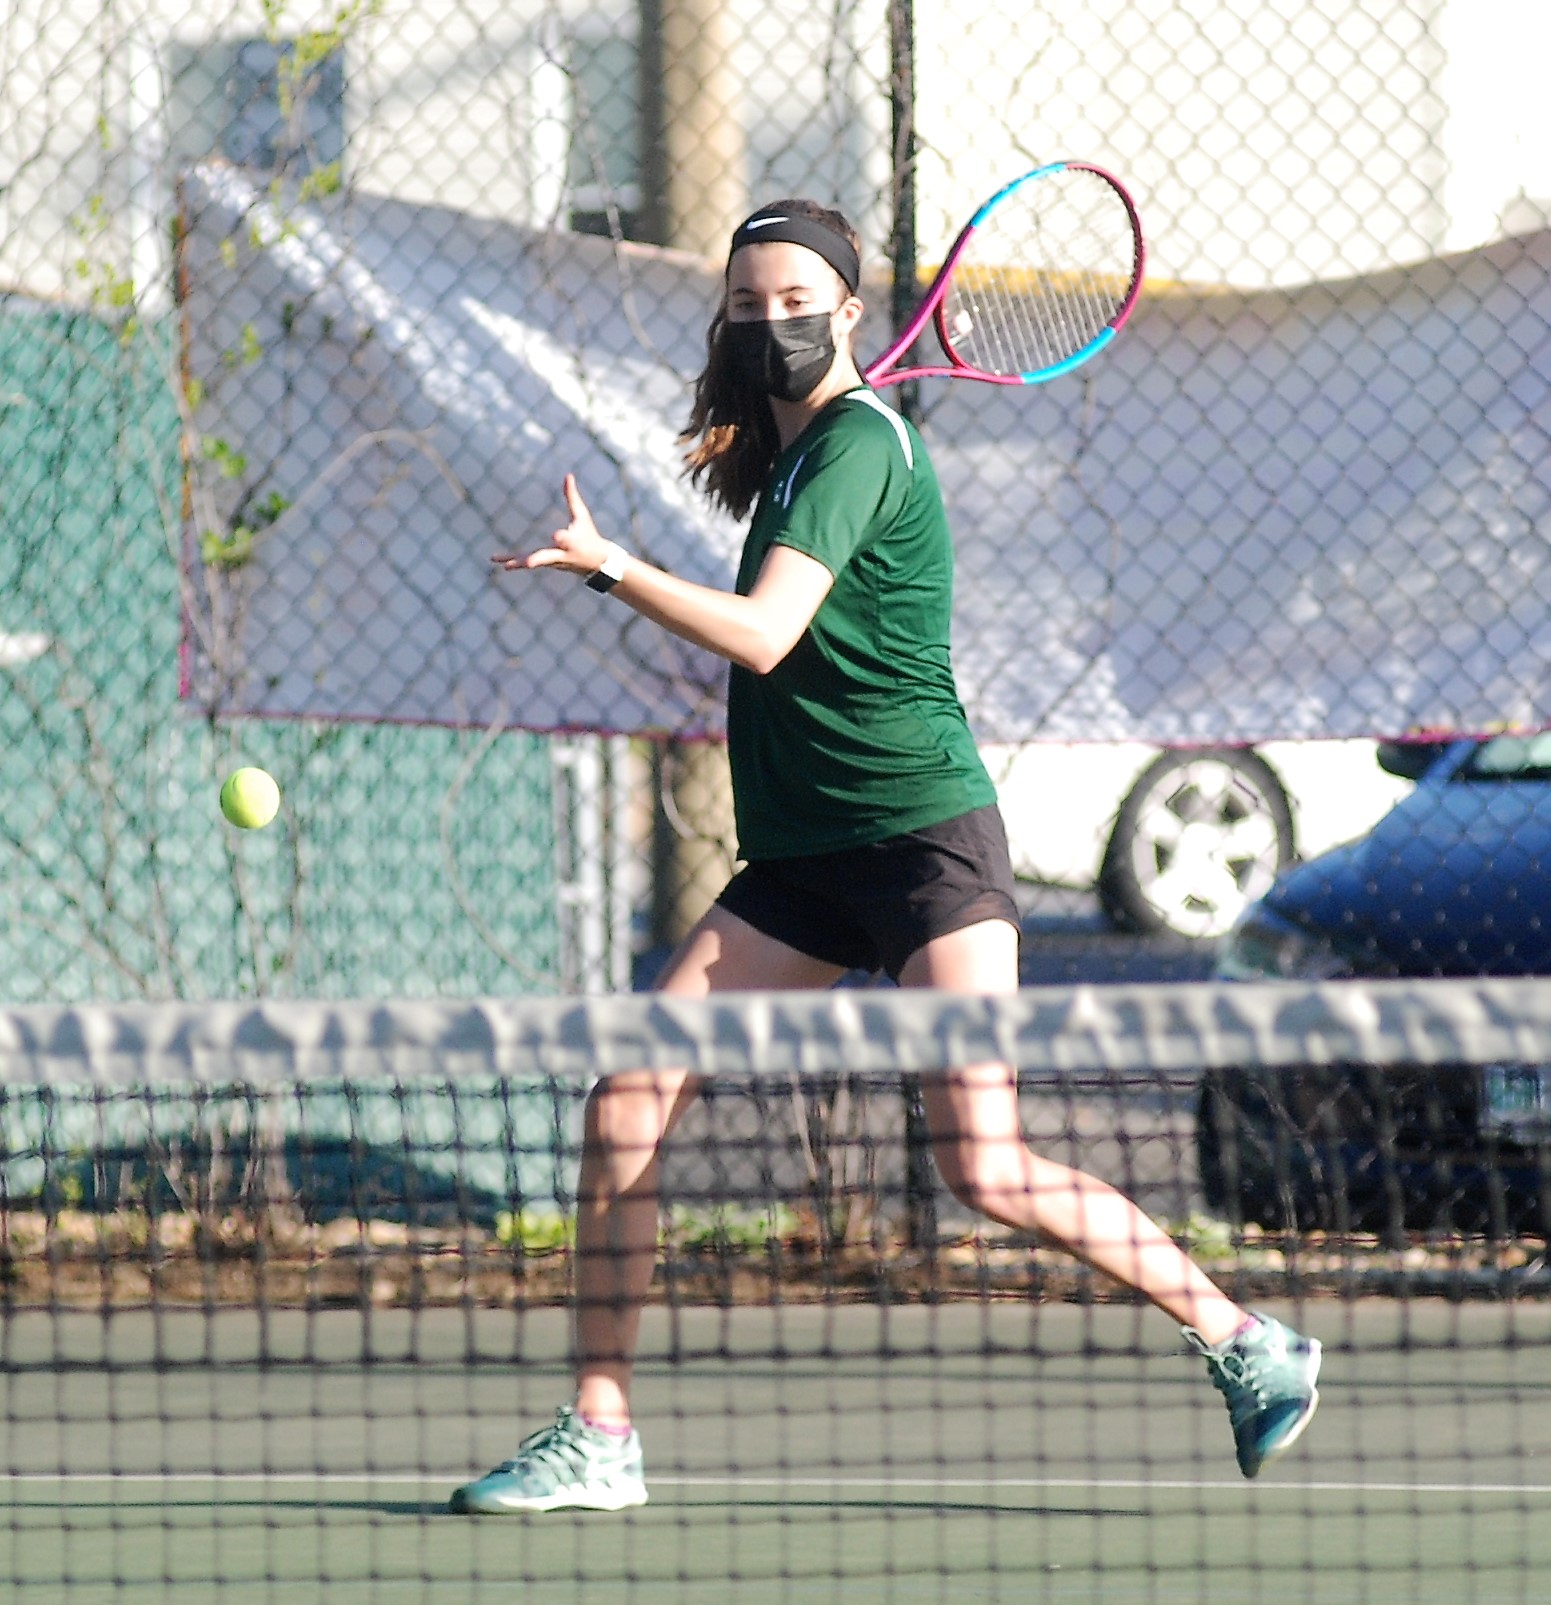 Emily Leclerc playing tennis.